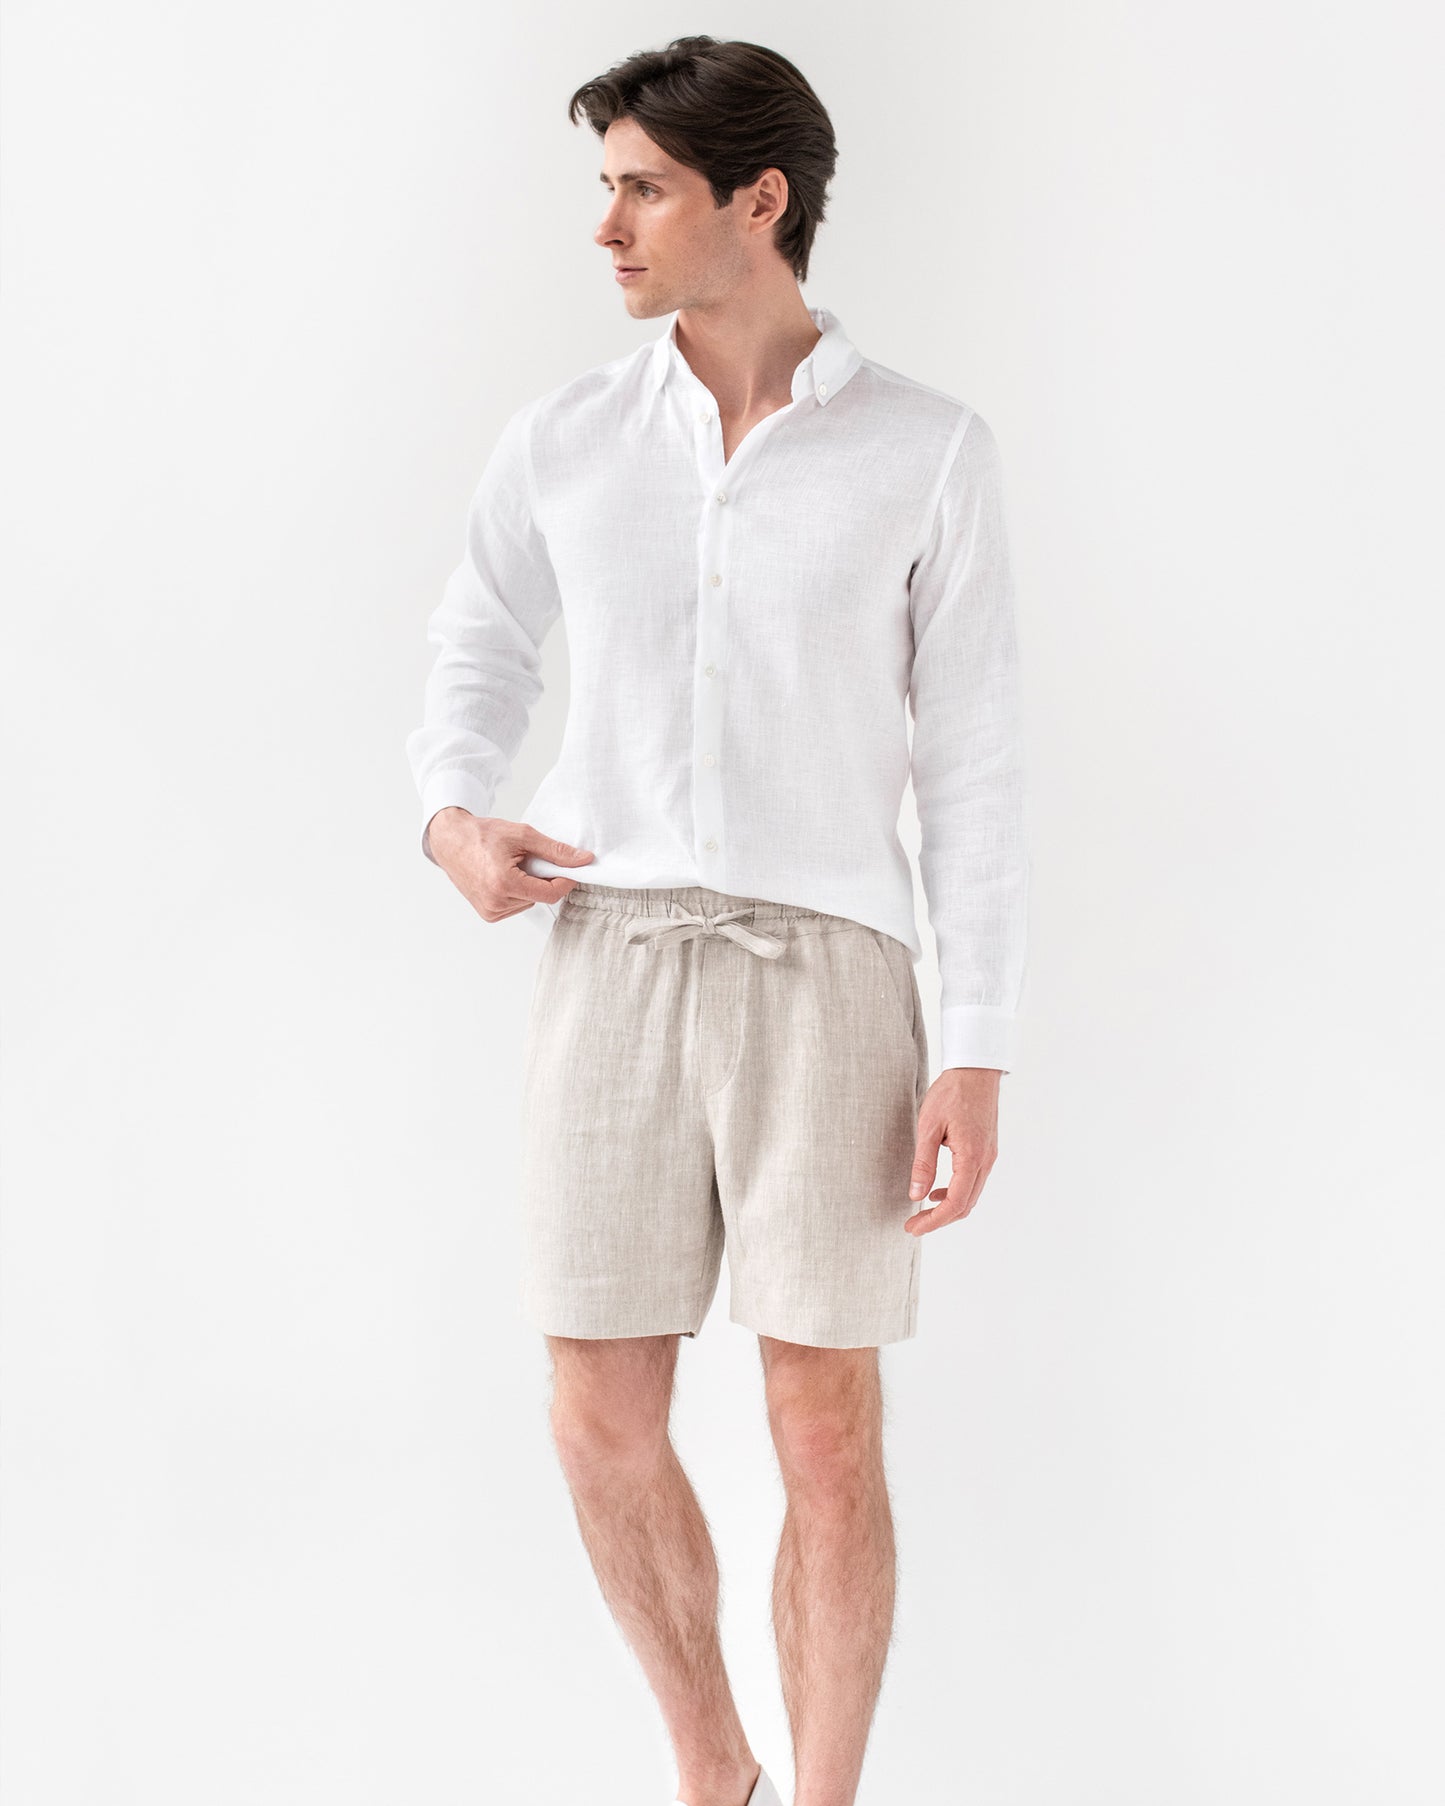 Men's linen shorts STOWE in natural melange - MagicLinen